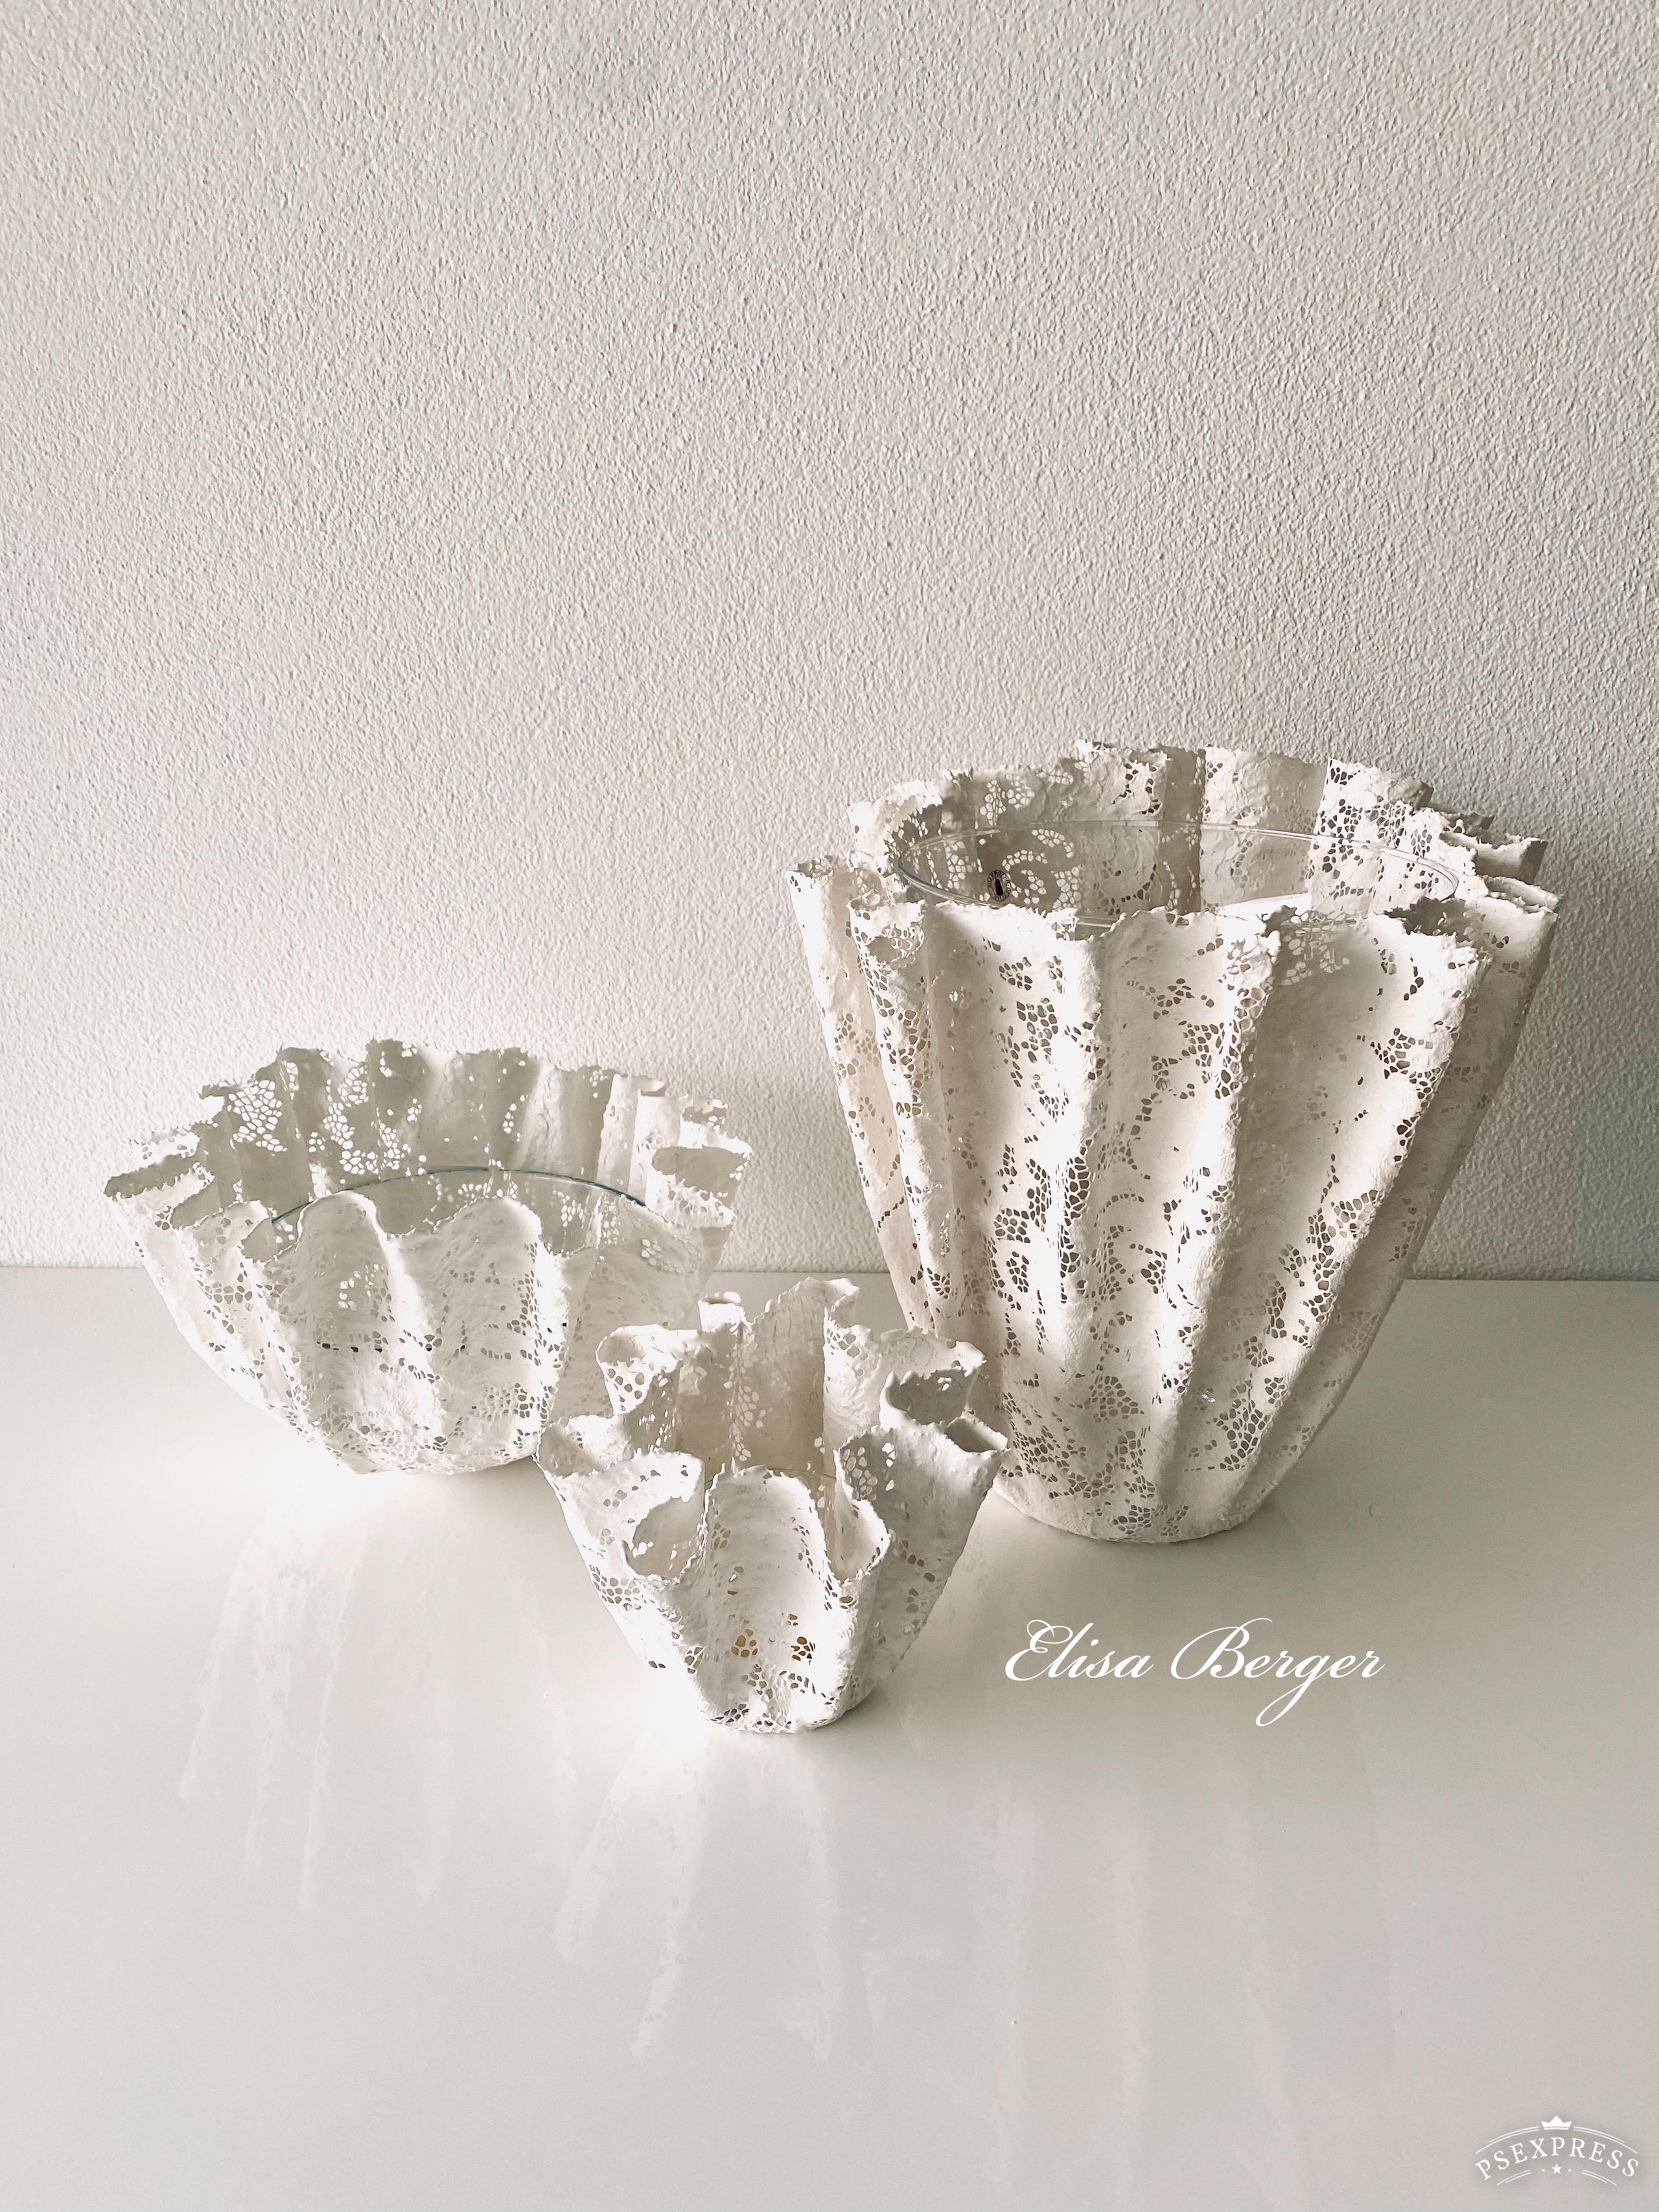 Vaso Cosy Bianco Home Decor White Vase, Shop online, Candle holder, tealight, vase, arredamento, Negozio Lugano, Elisa Berger Interior Design Studio